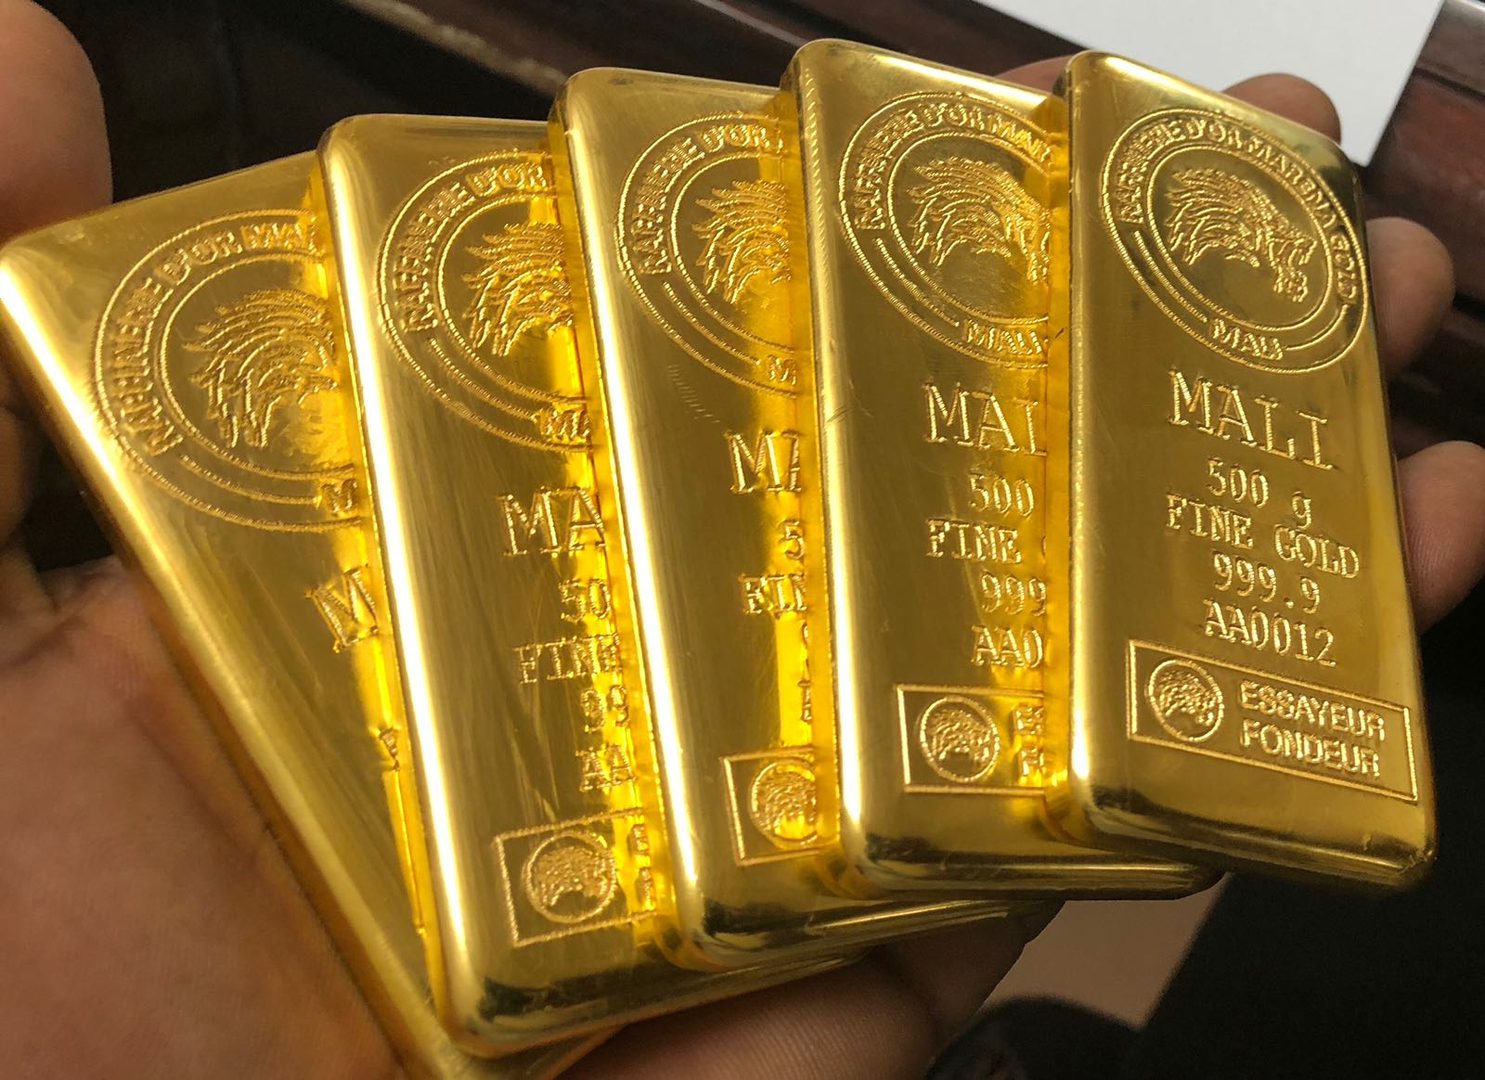 Mali's Gold production